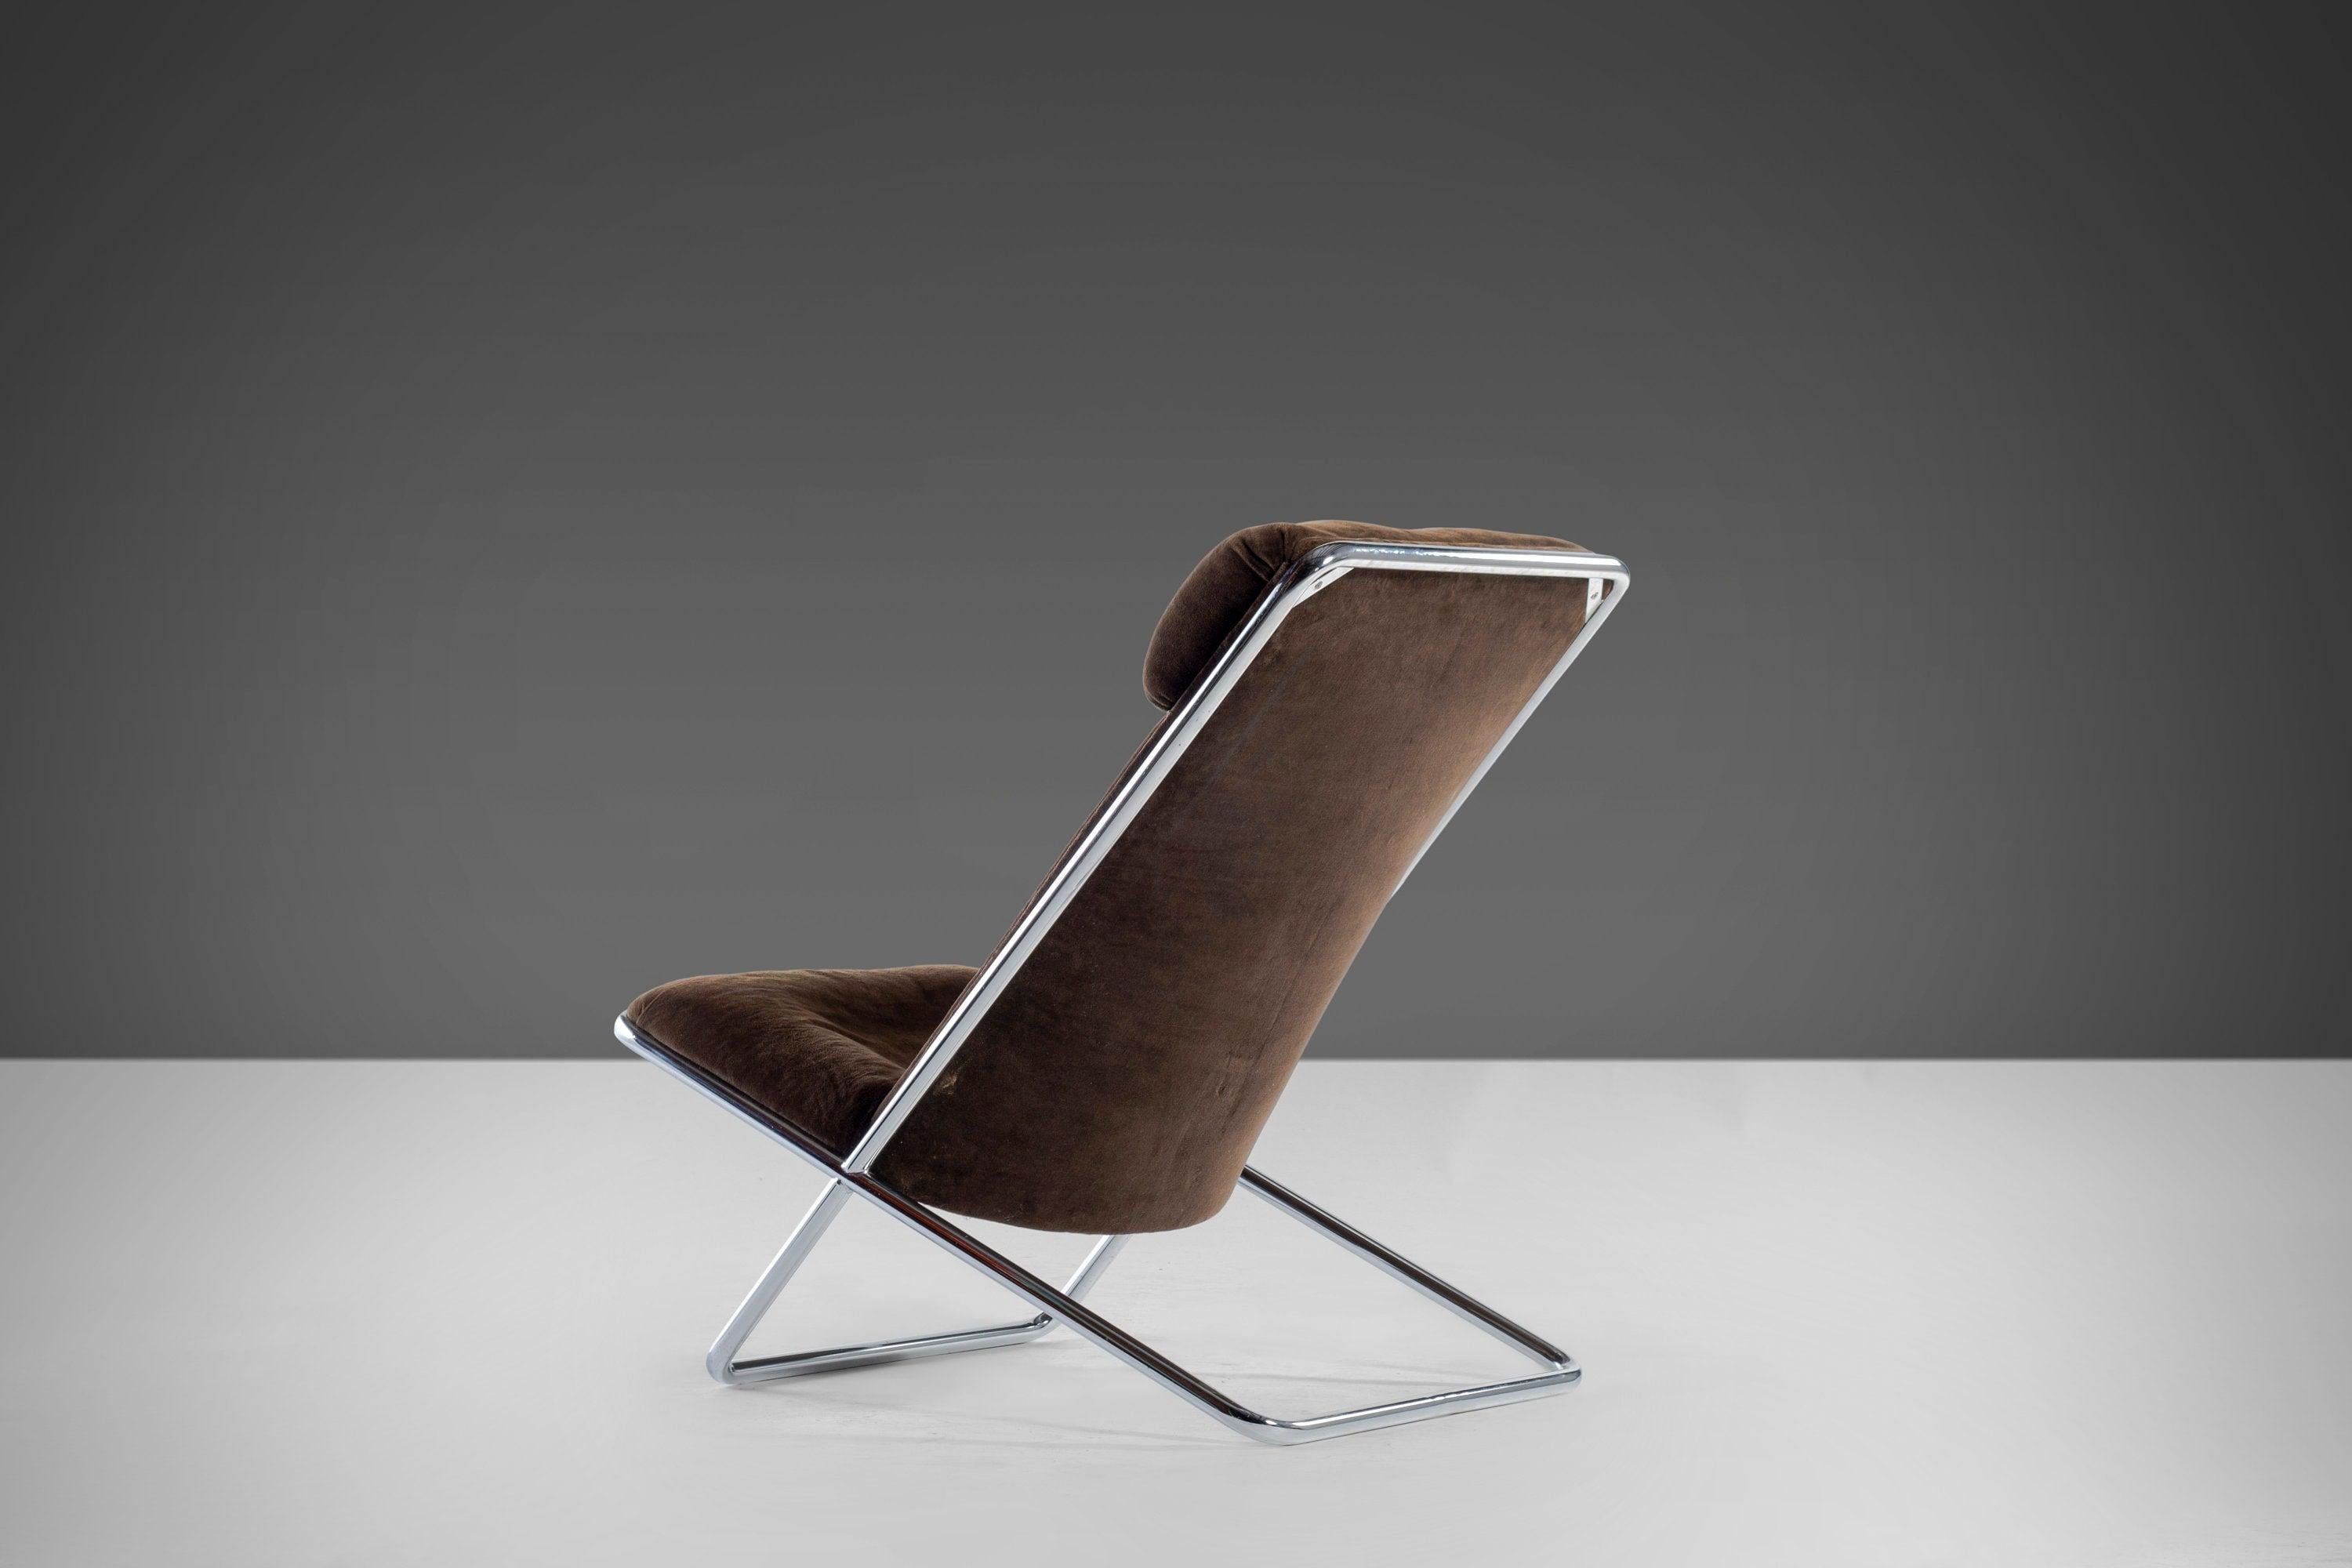 American Ward Bennett Scissor Chrome Lounge Chair in Original Brown Upholstery, c. 1960s For Sale